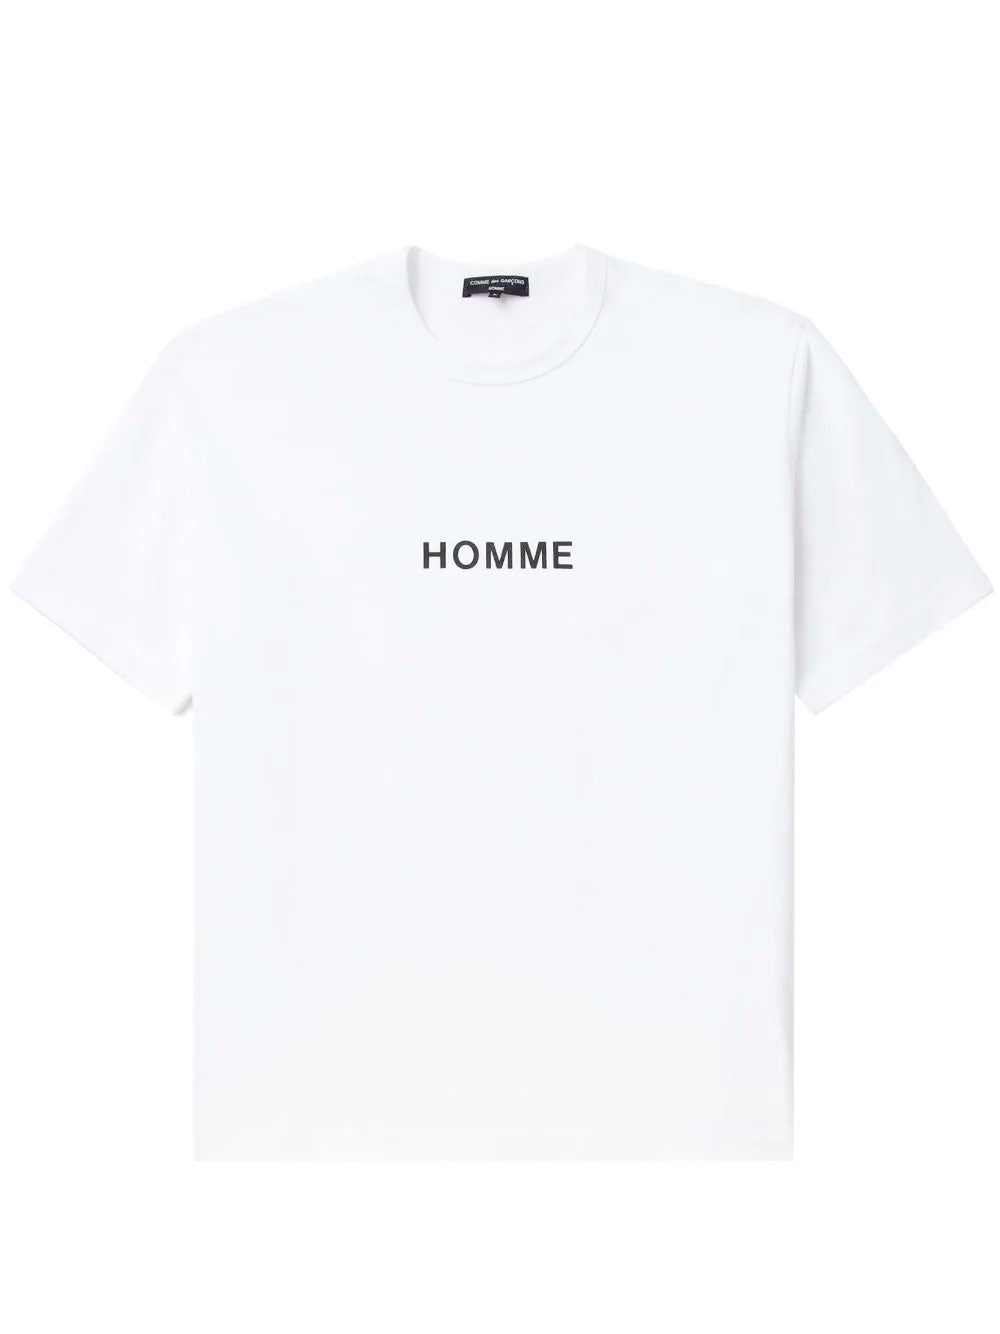 Homme-print t-shirt